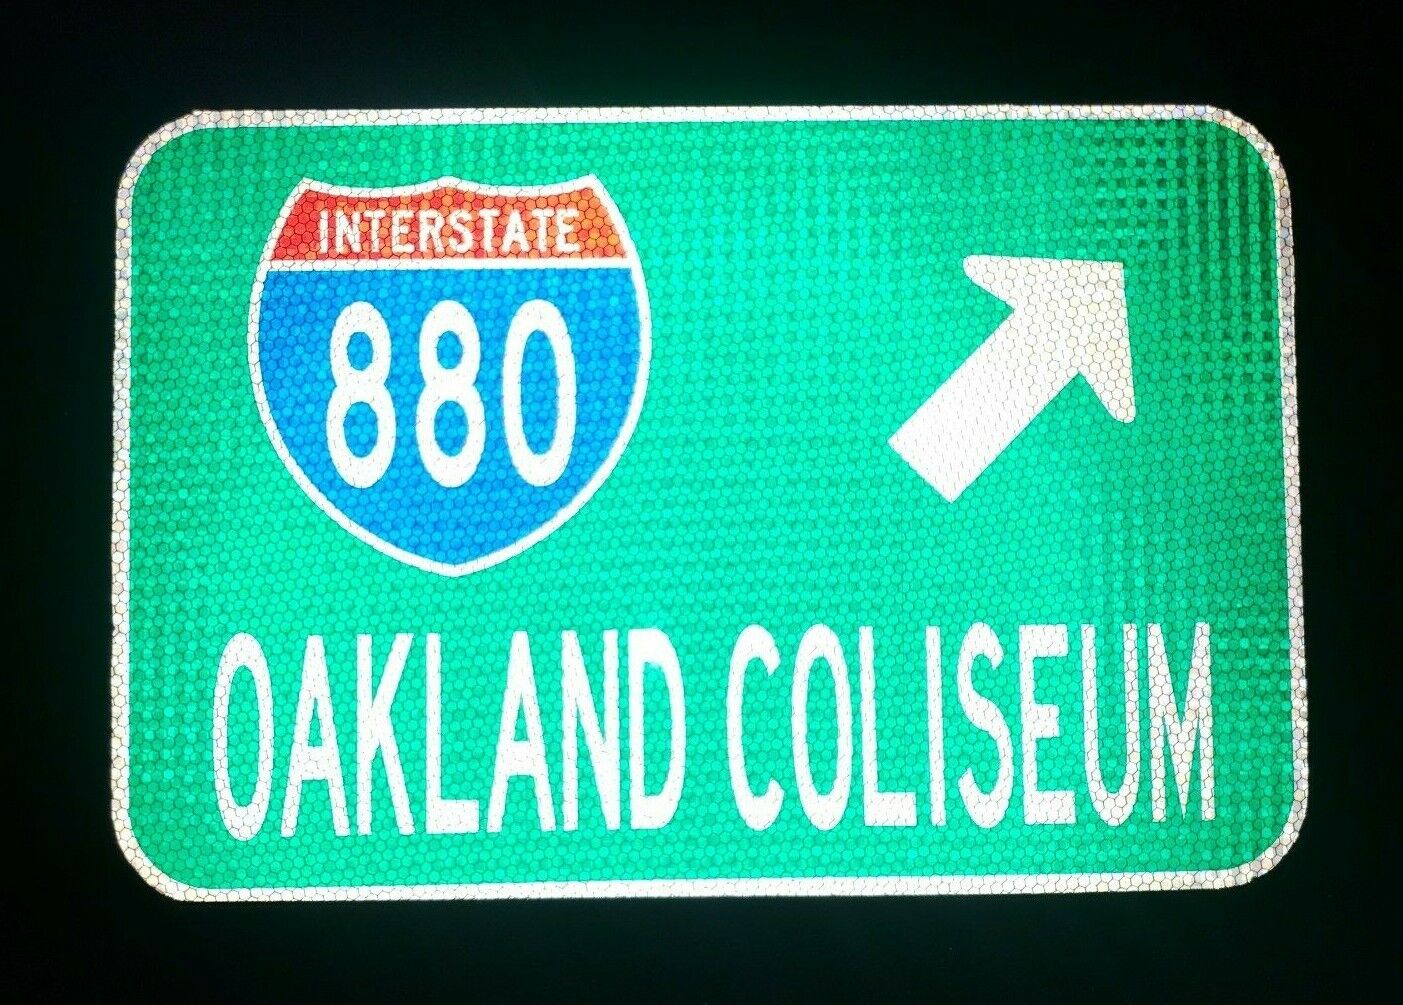 OAKLAND COLISEUM, California route road sign 18